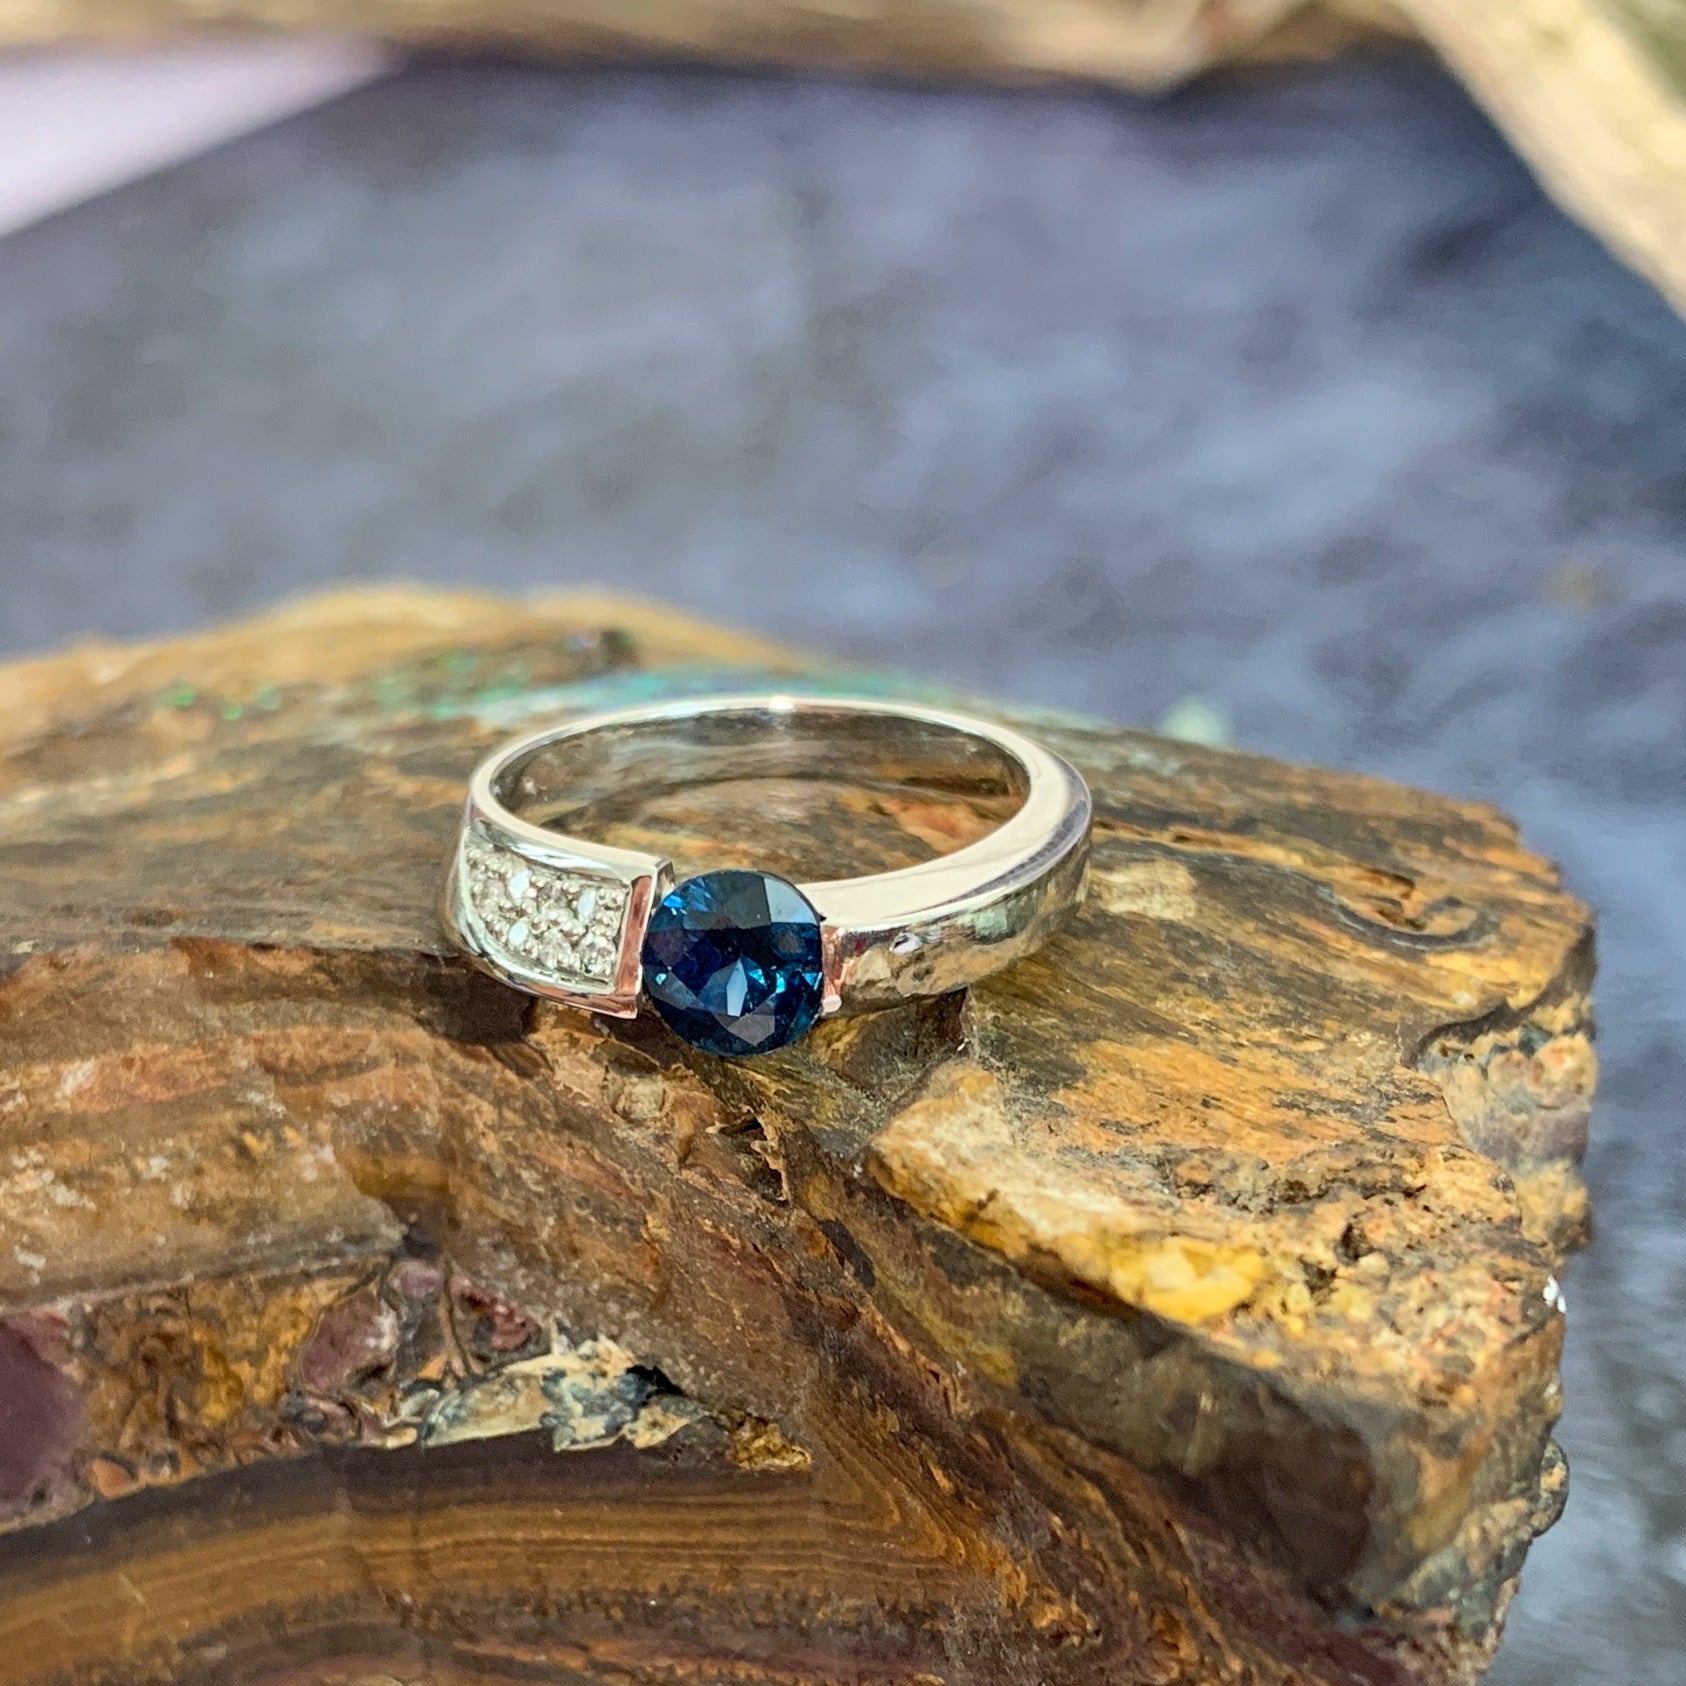 One Platinum ring 0.92ct Australian Sapphire and Diamond ring - Masterpiece Jewellery Opal & Gems Sydney Australia | Online Shop